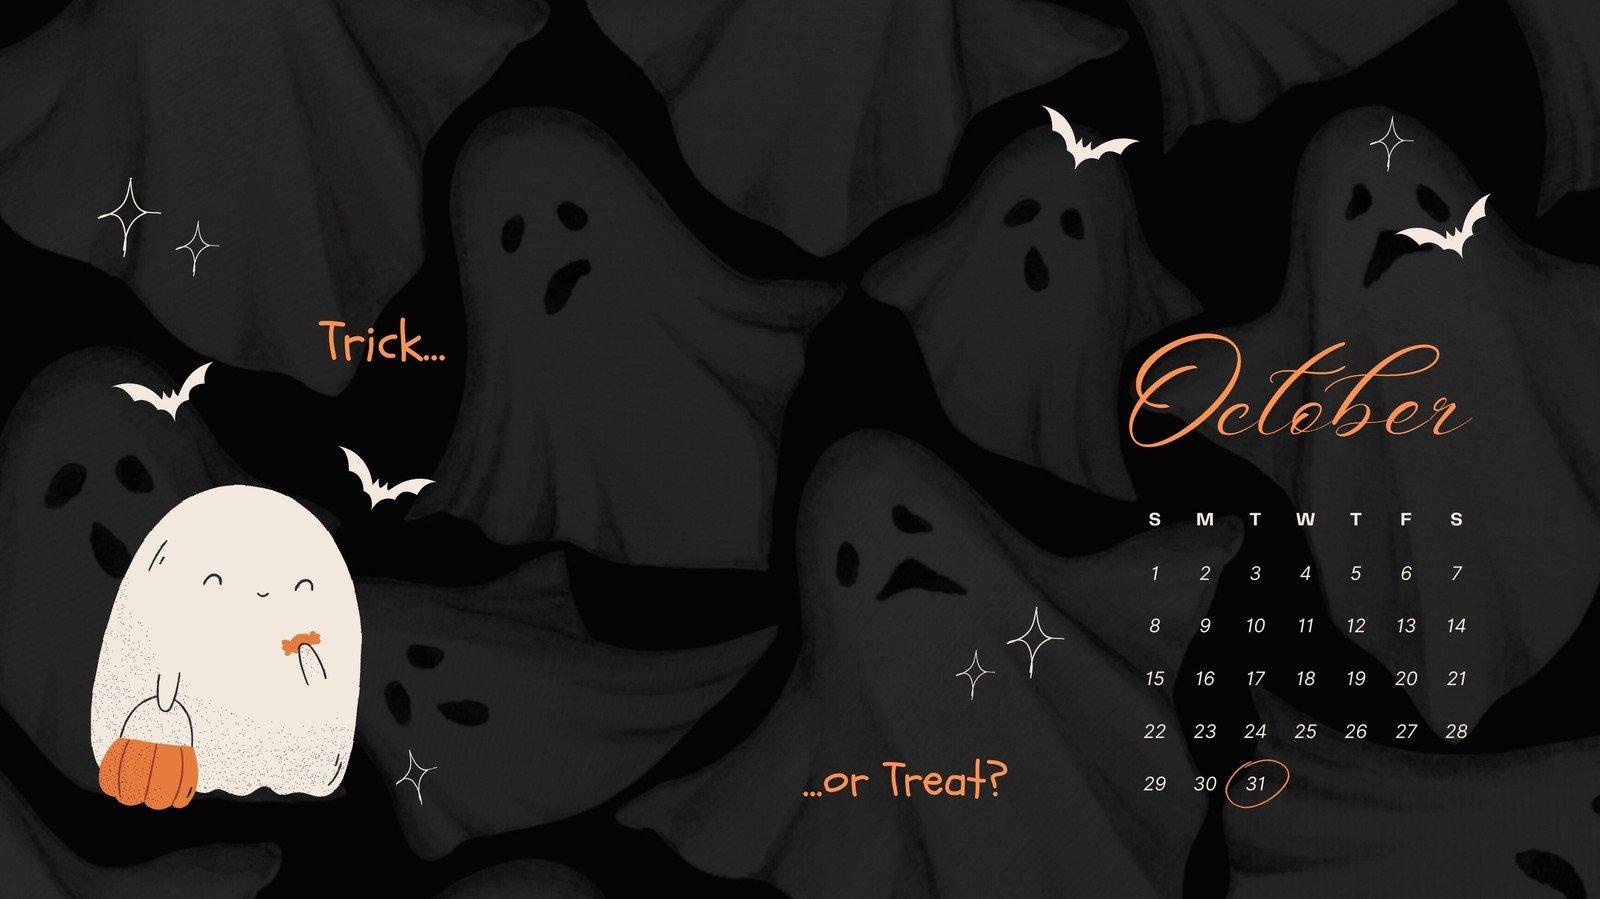 Free customizable Halloween desktop wallpaper templates Canva